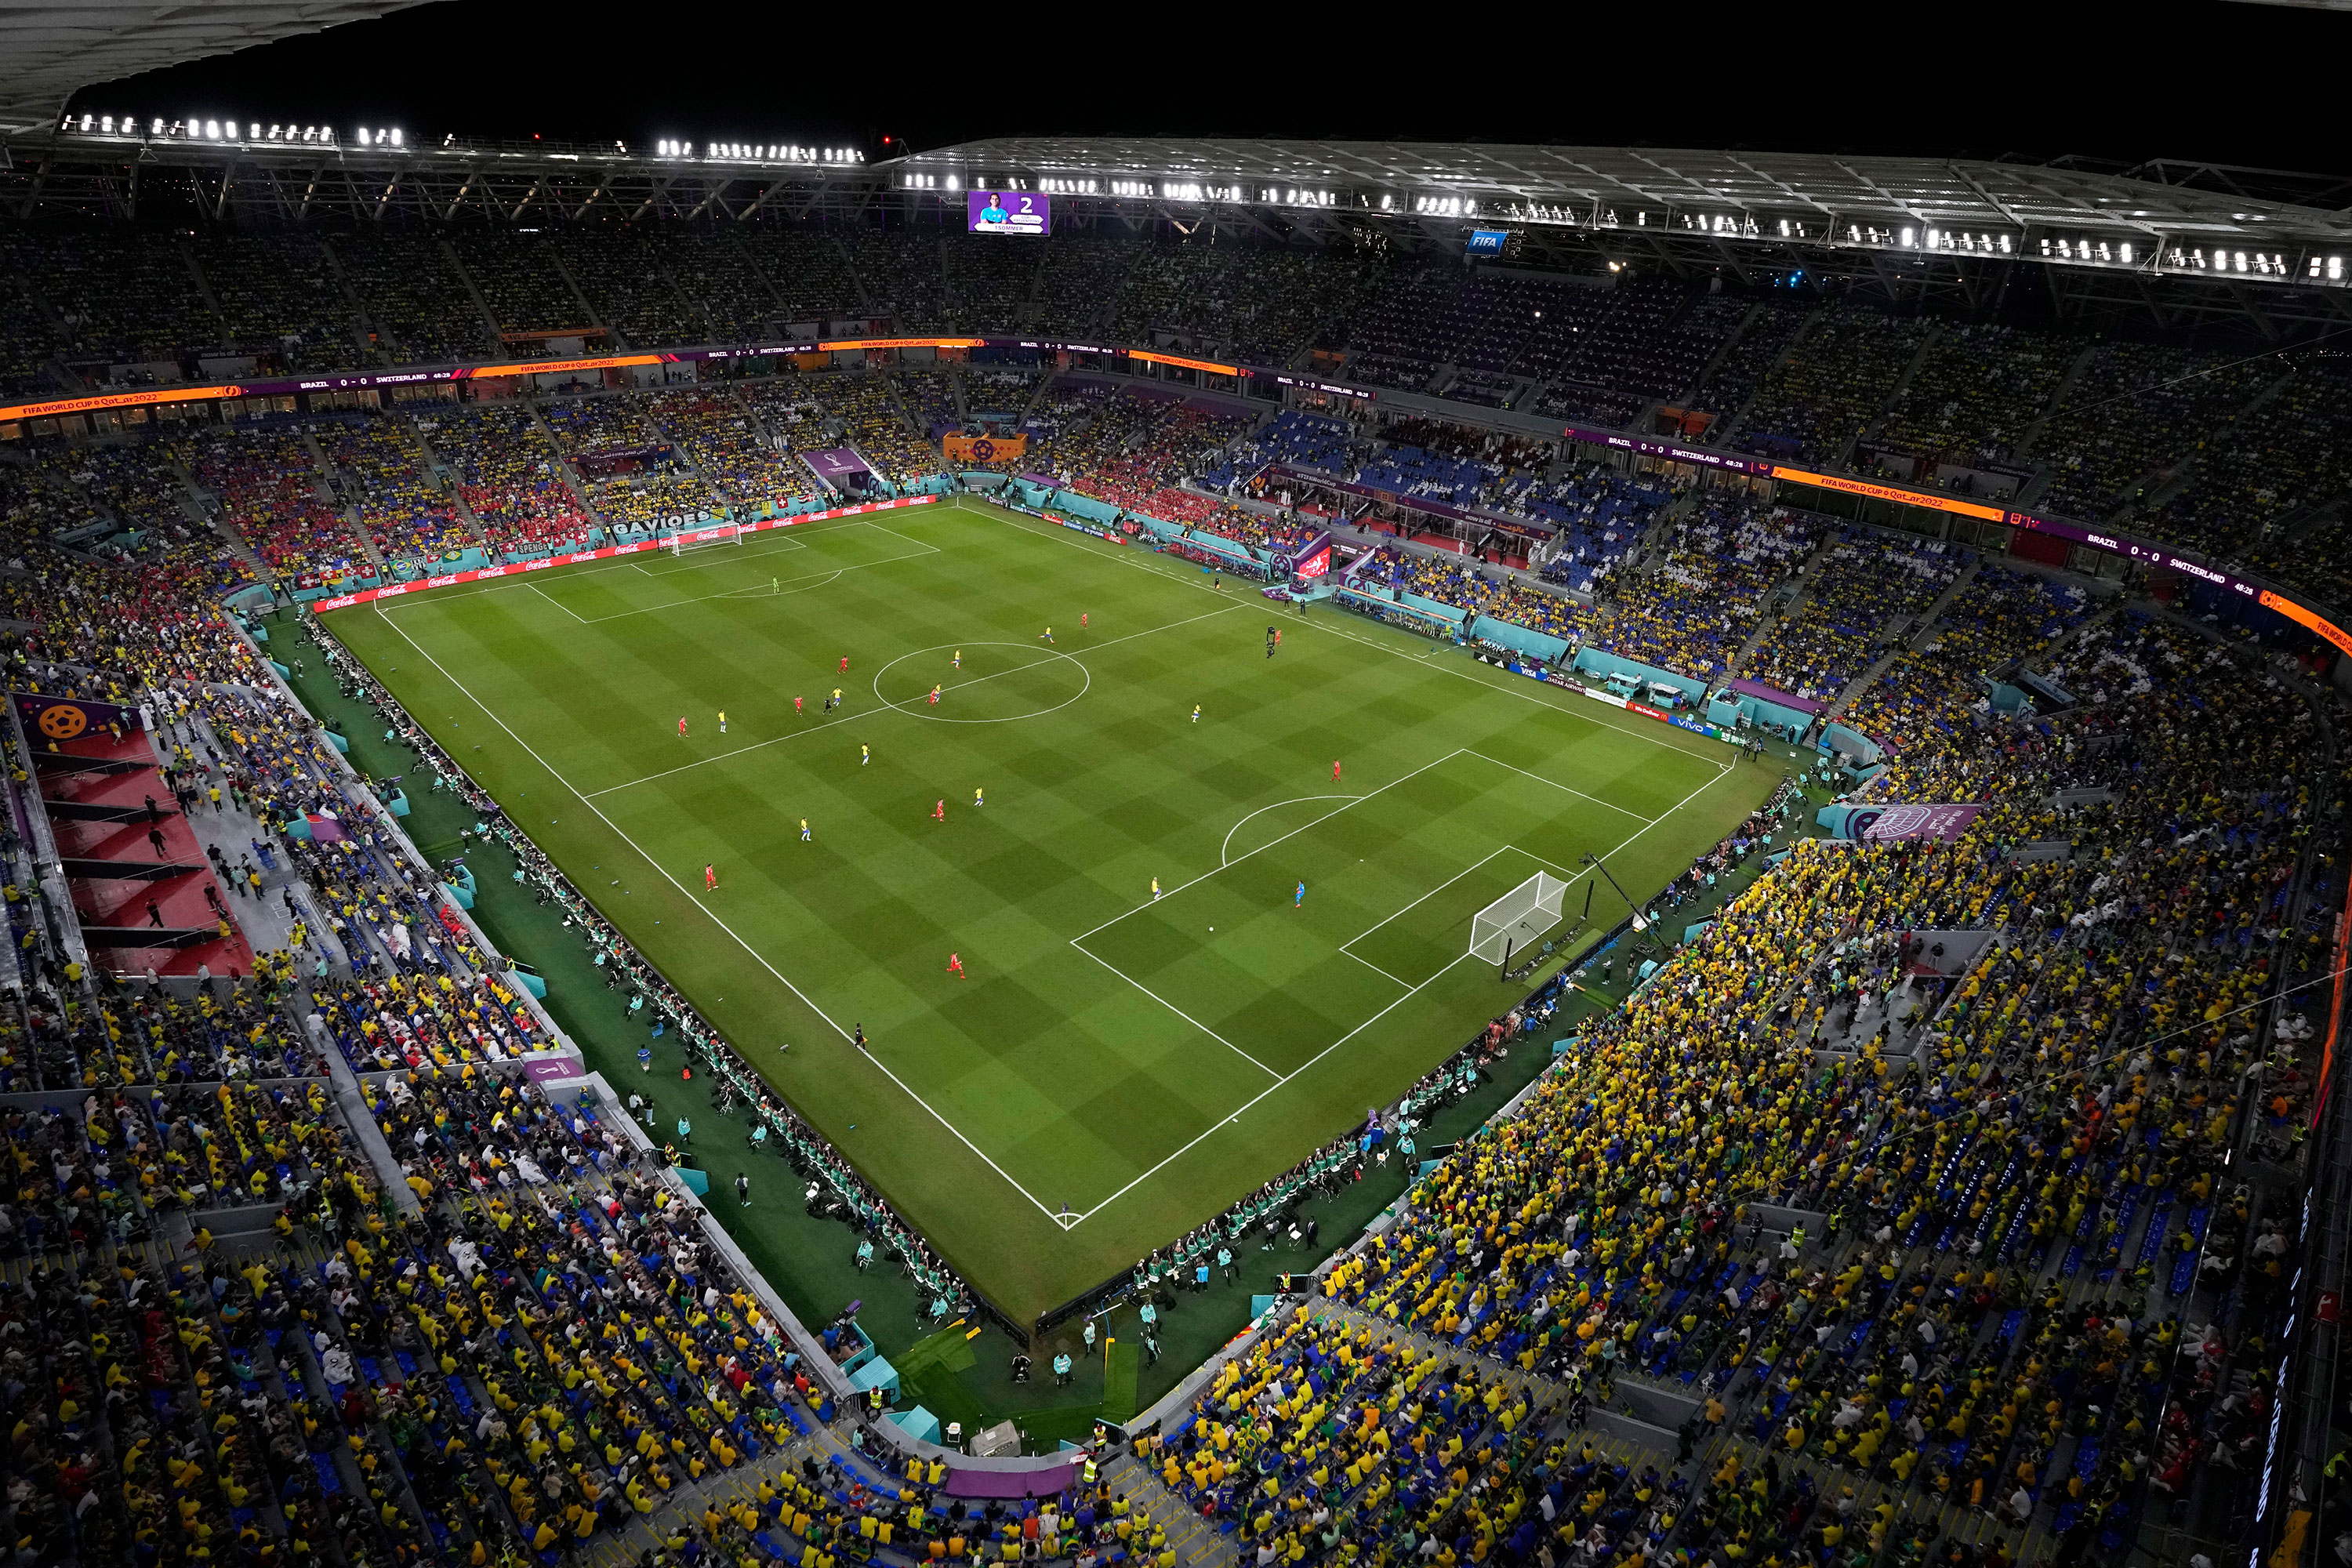 Brazil and Switzerland compete on Monday at Stadium 974 in Doha, Qatar.